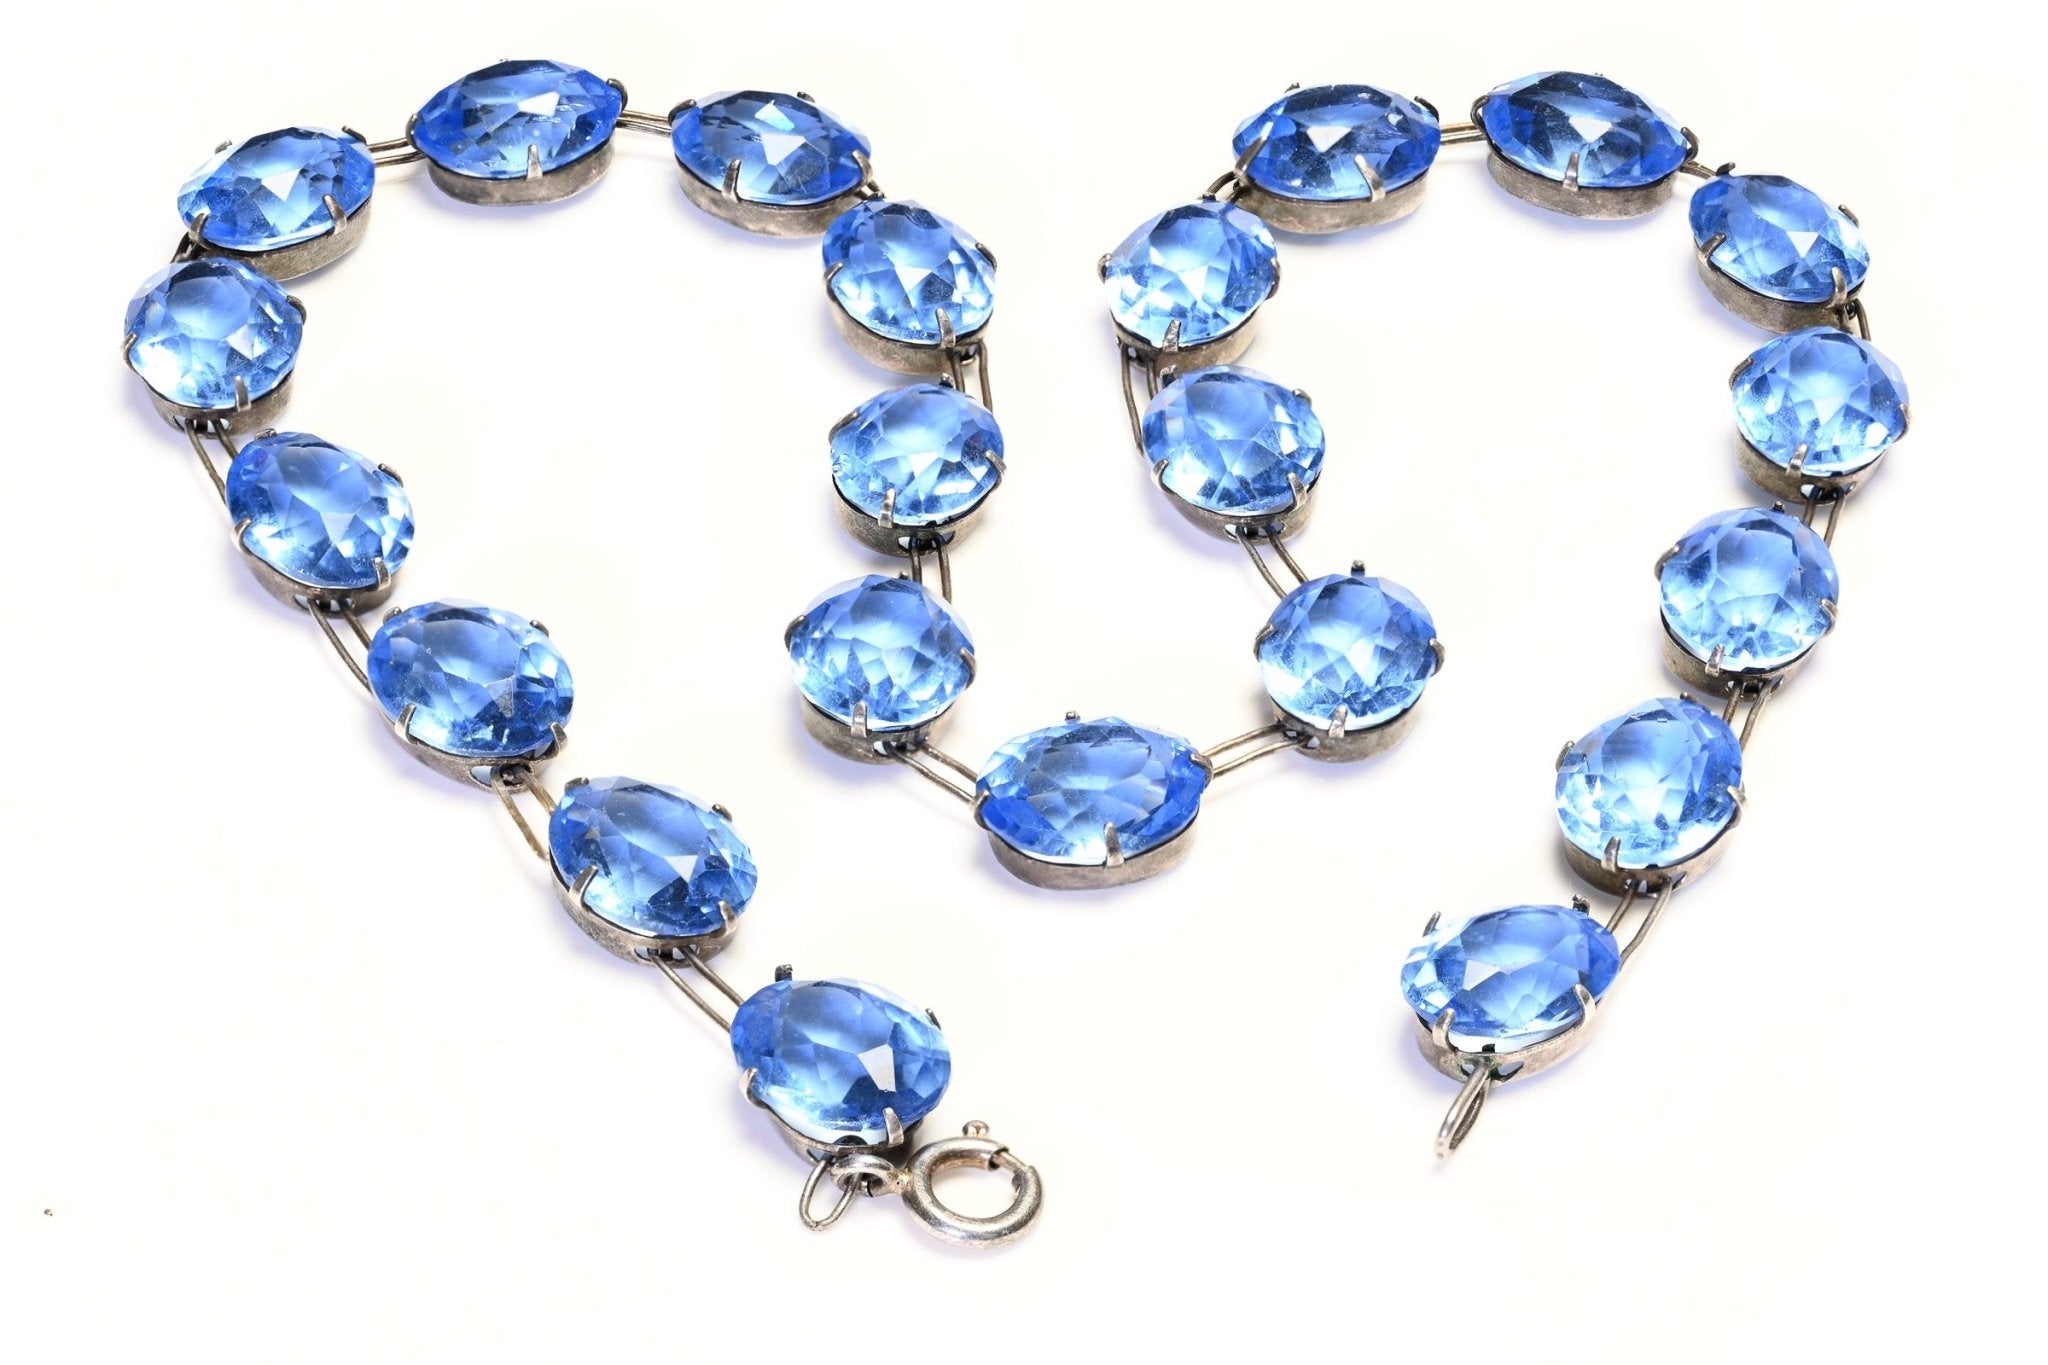 Vintage 1930’s Art Deco Sterling Silver Blue Paste Riviere Chain Necklace